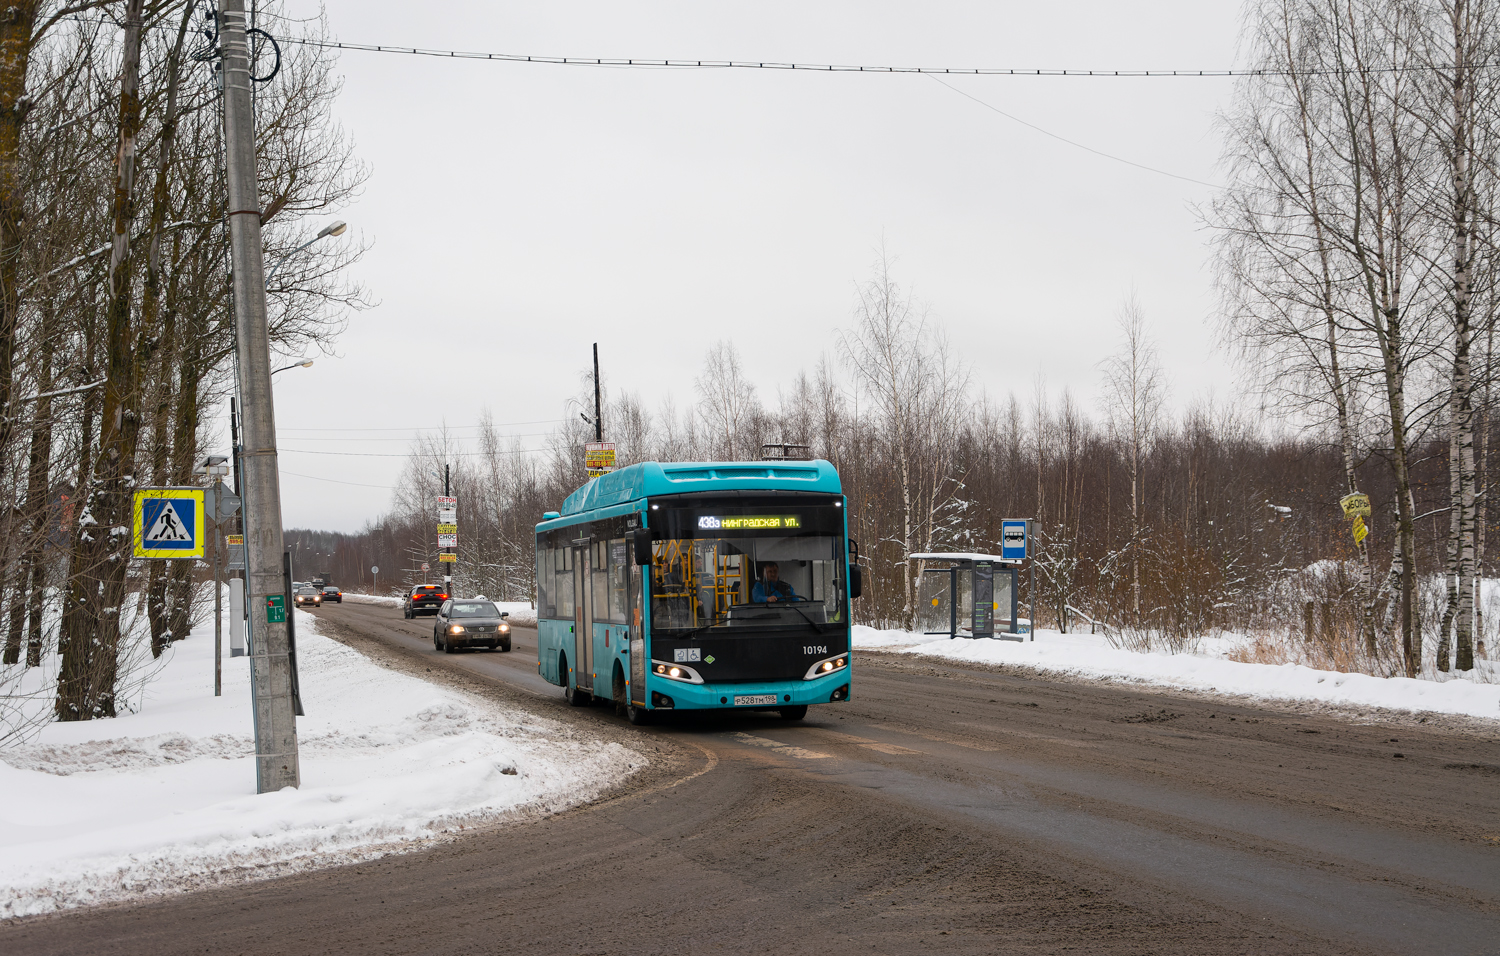 Saint Petersburg, Volgabus-4298.G4 (CNG) # 10194